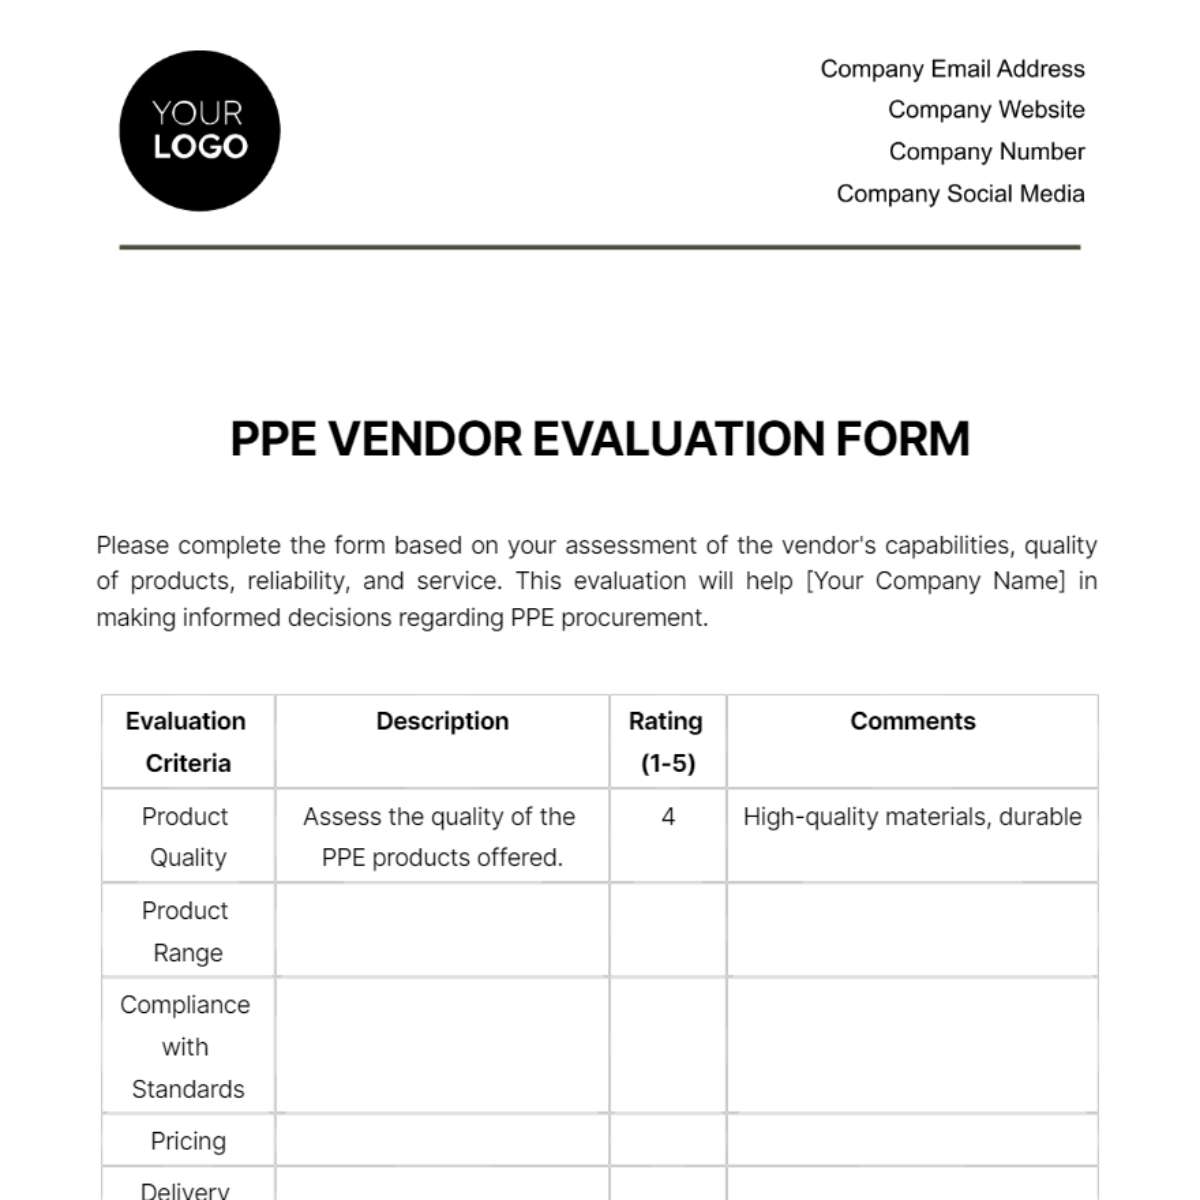 PPE Vendor Evaluation Form Template